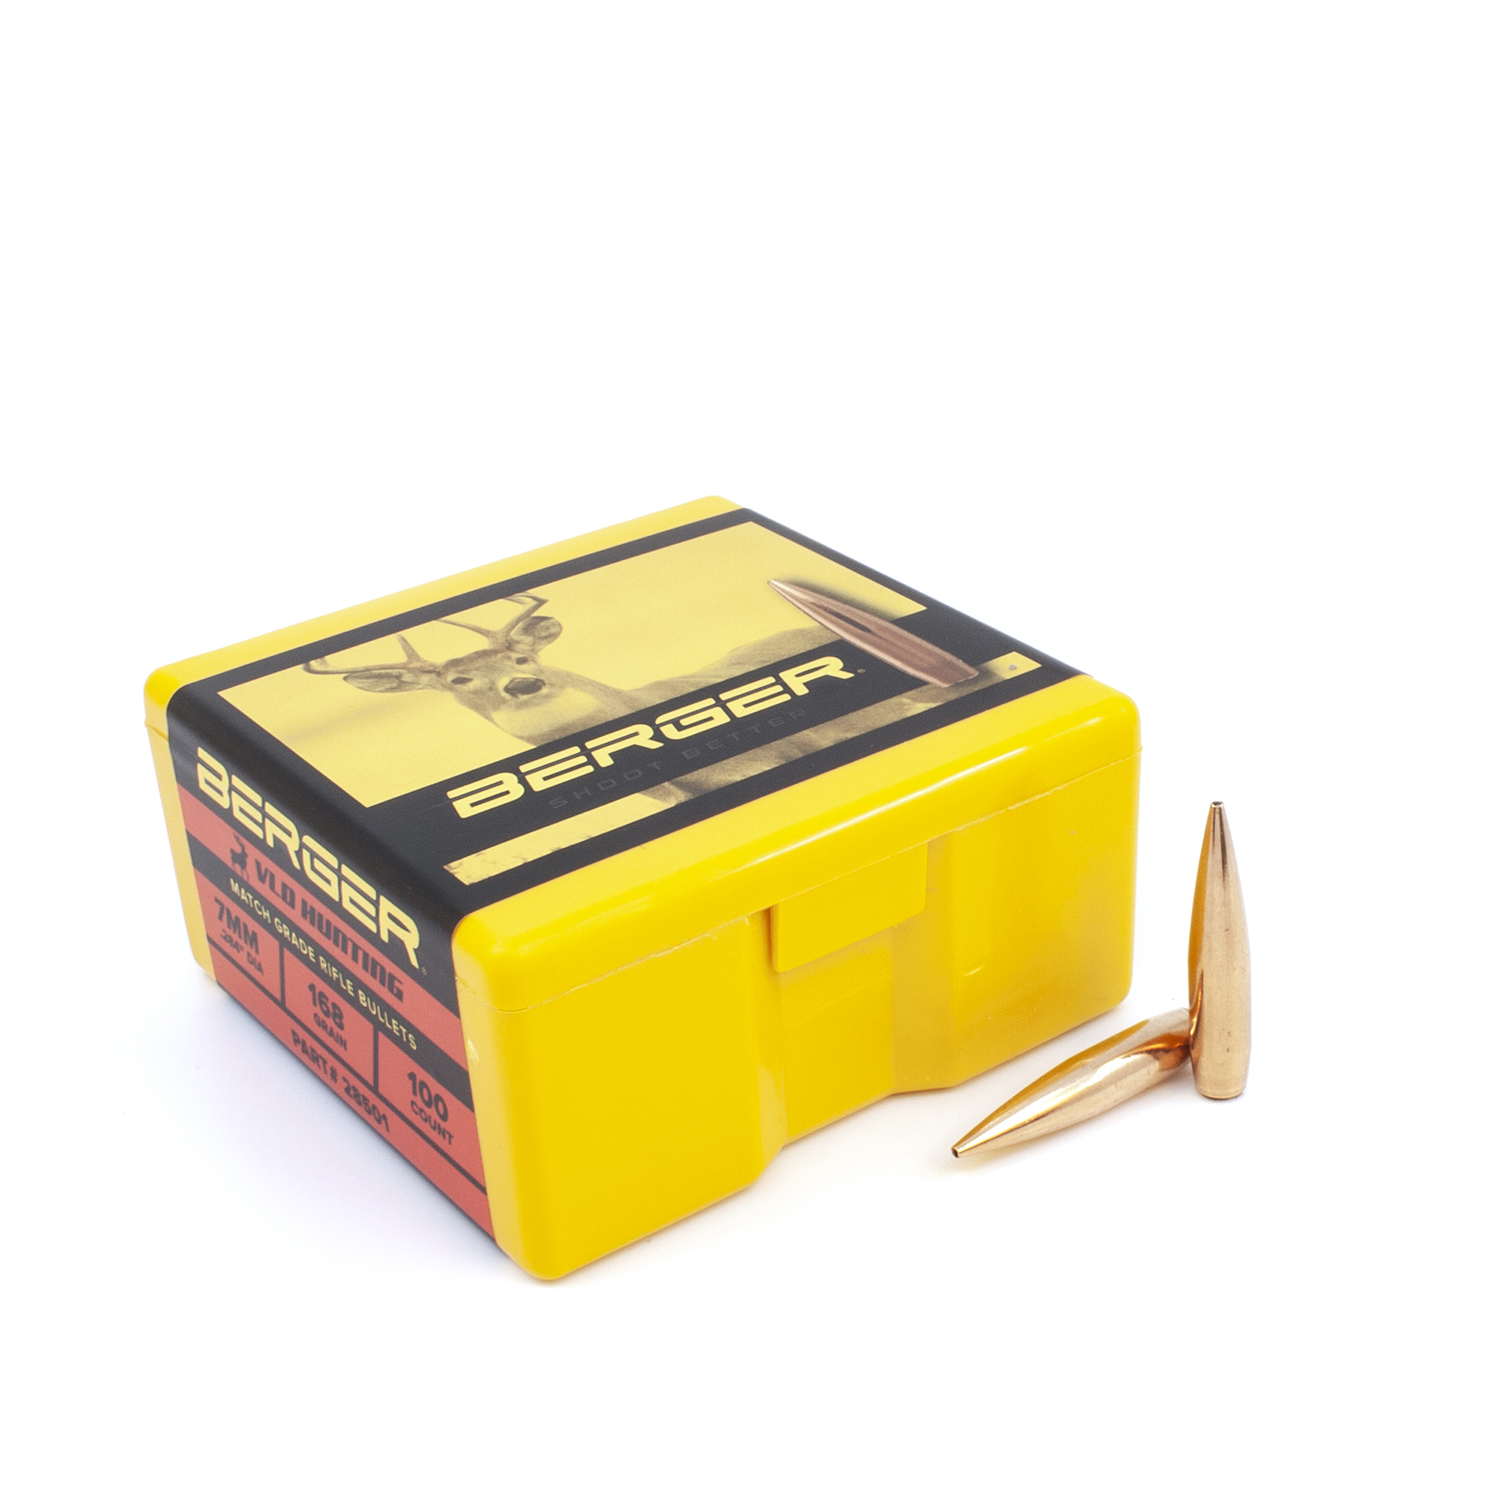 Berger Bullets - 7mm, 168 gr. VLD Hunting - Box of 100